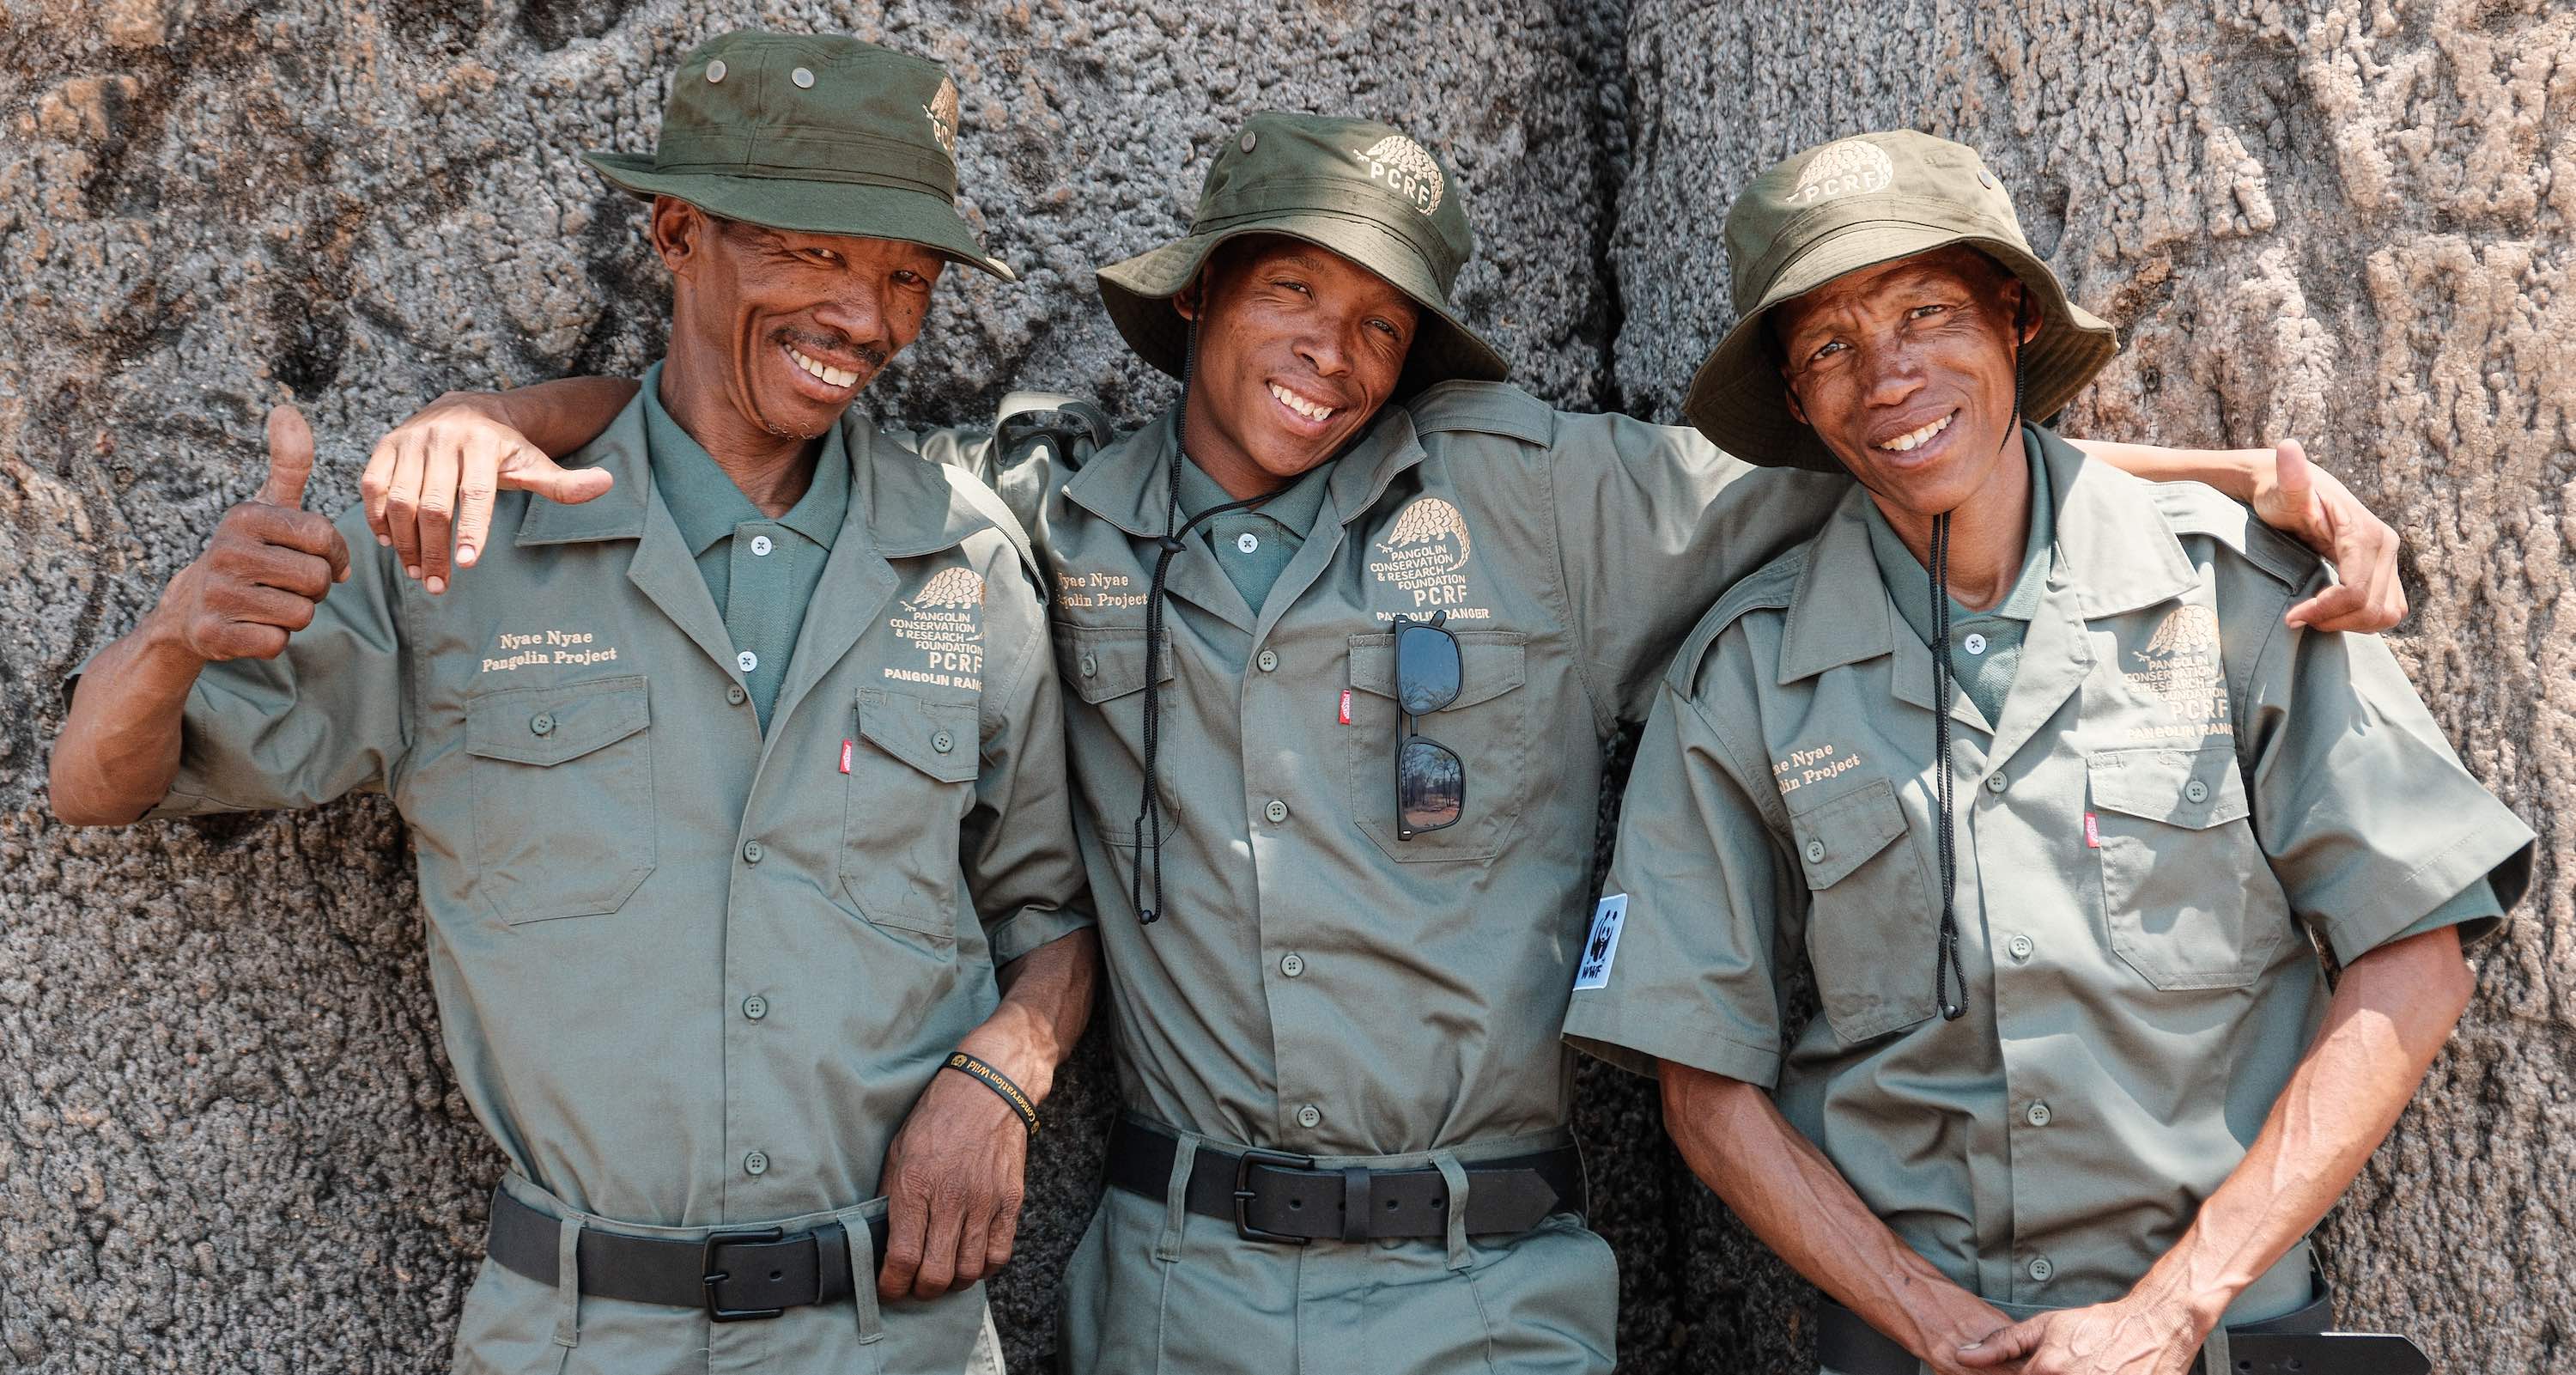 Three uniformed rangers smiling at the camera.